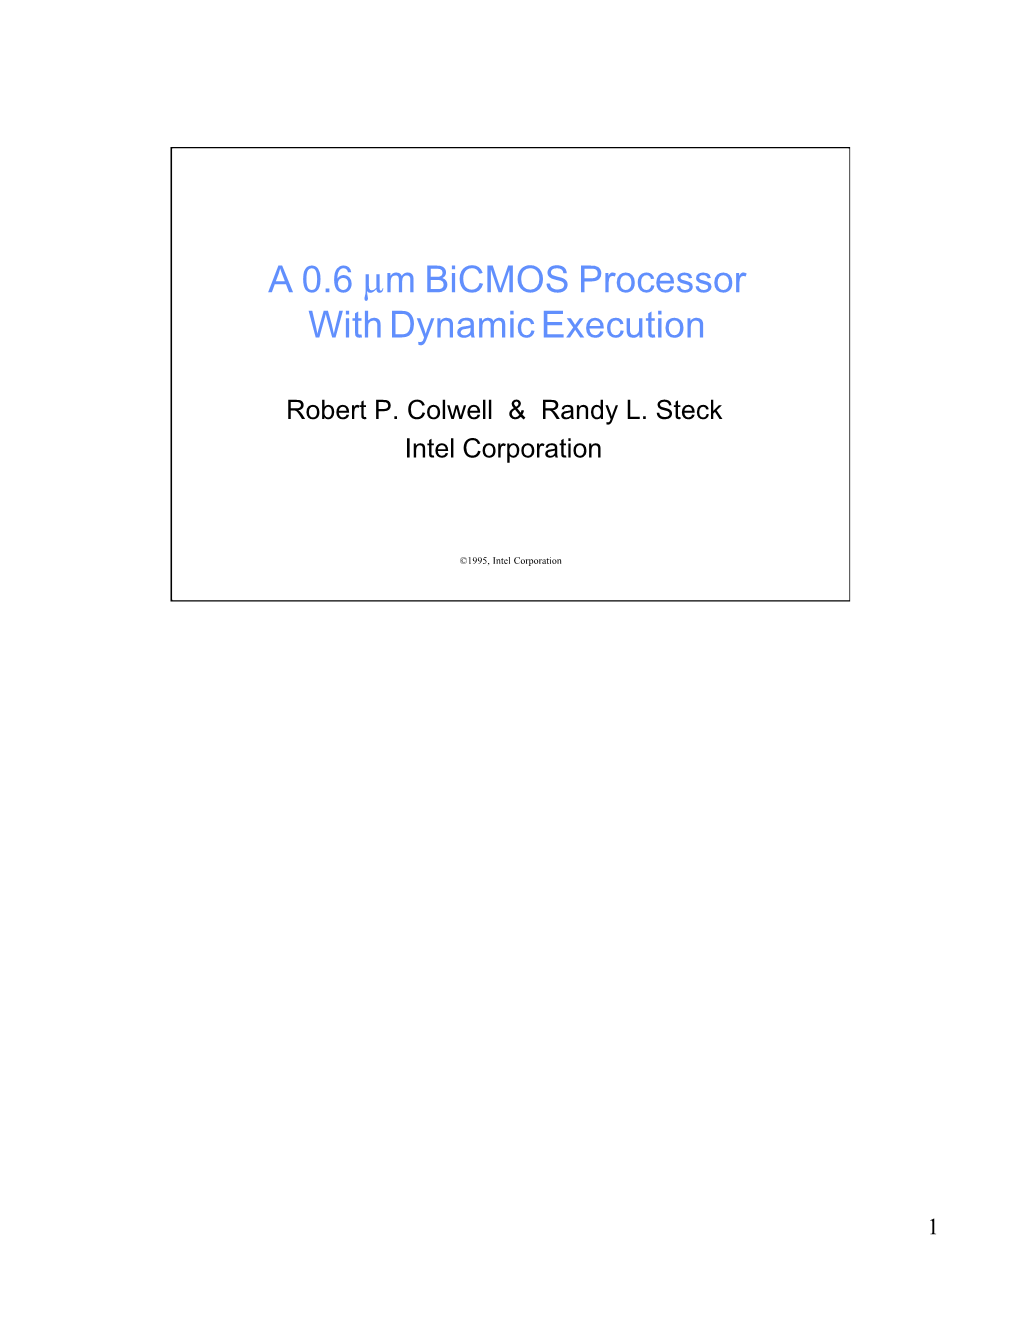 A 0.6 Μm Bicmos Processor with Dynamic Execution